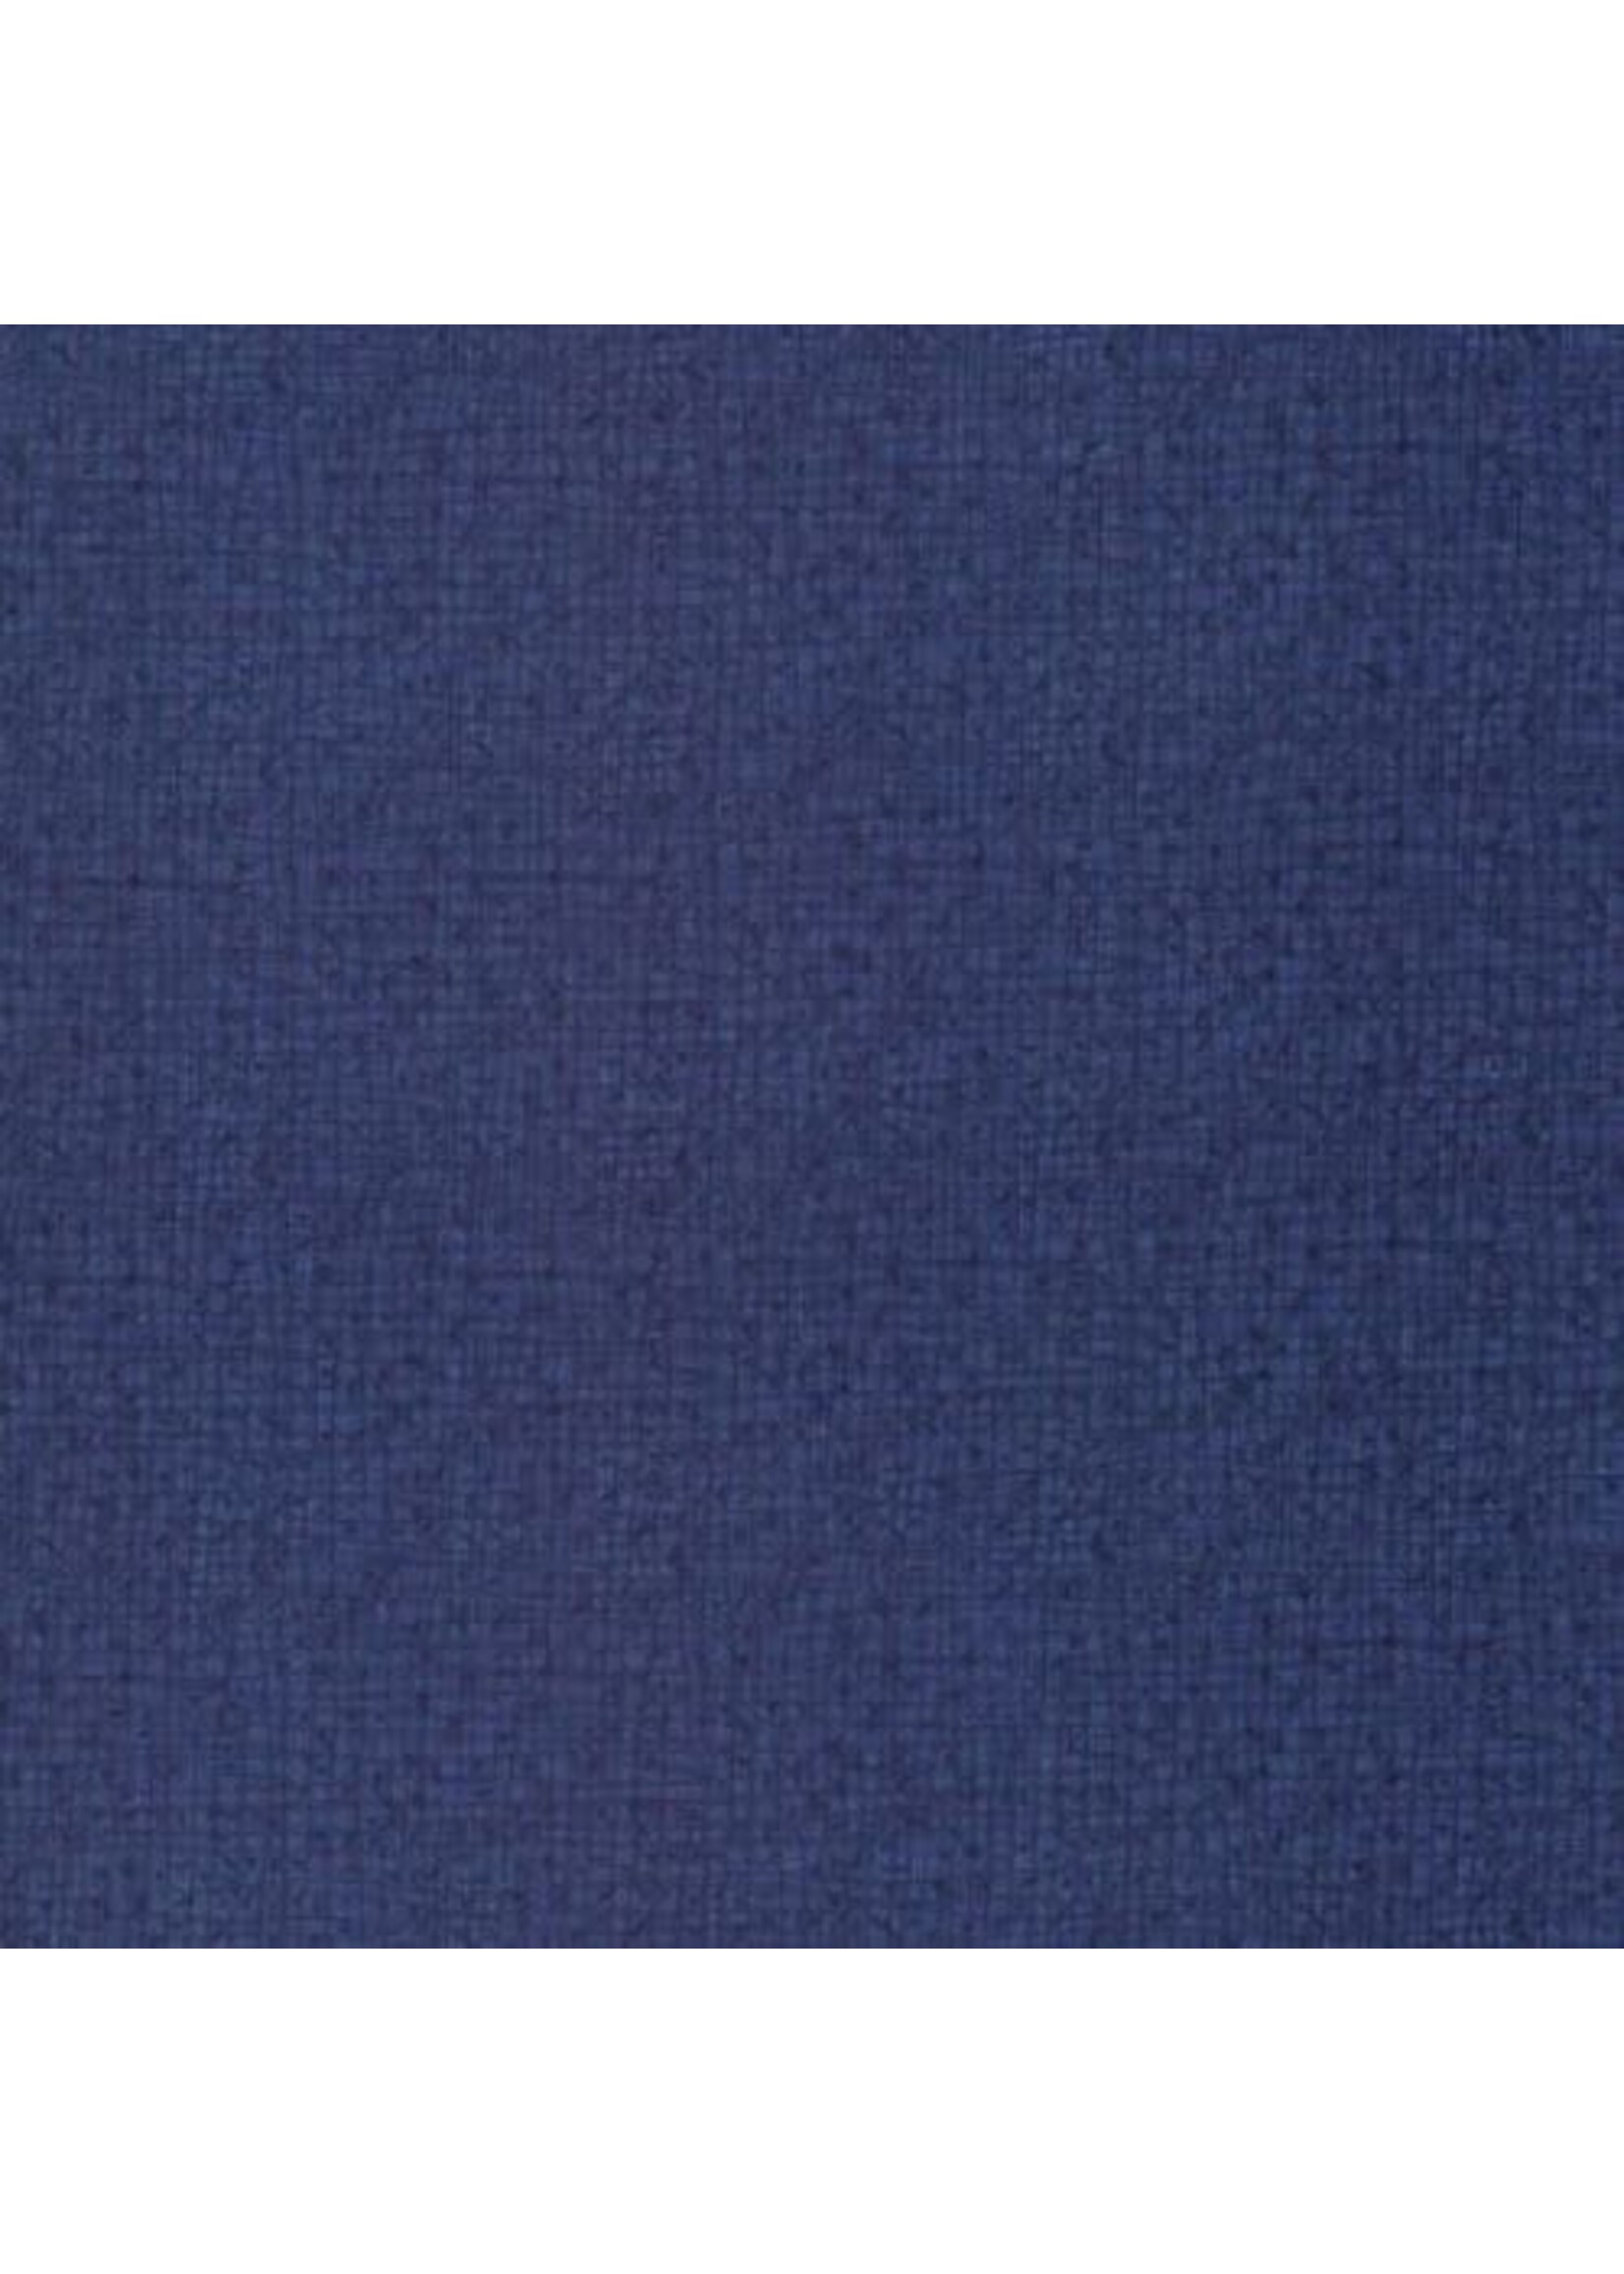 Moda Fabrics Thatched - Robin Pickens - Navy - 17494